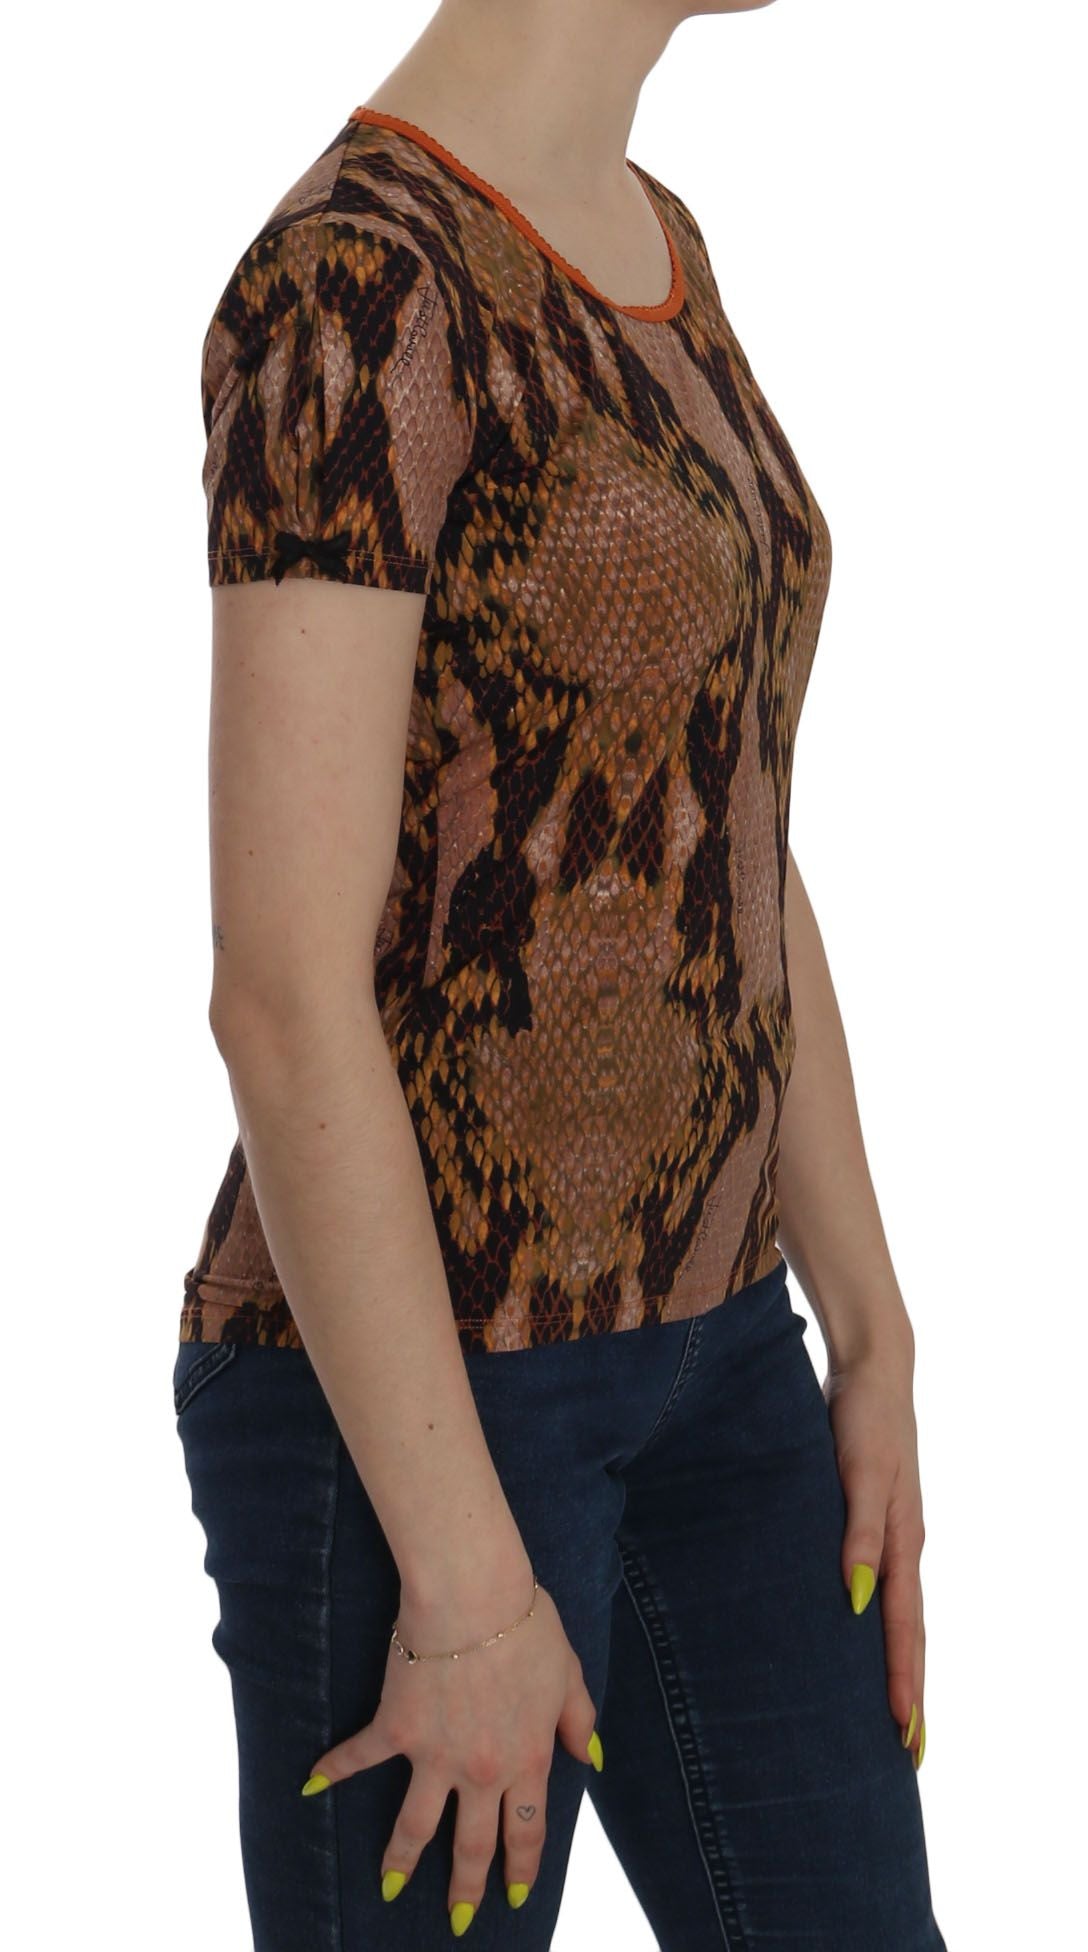 Just Cavalli Snake Skin Print Short Sleeve Top T-shirt